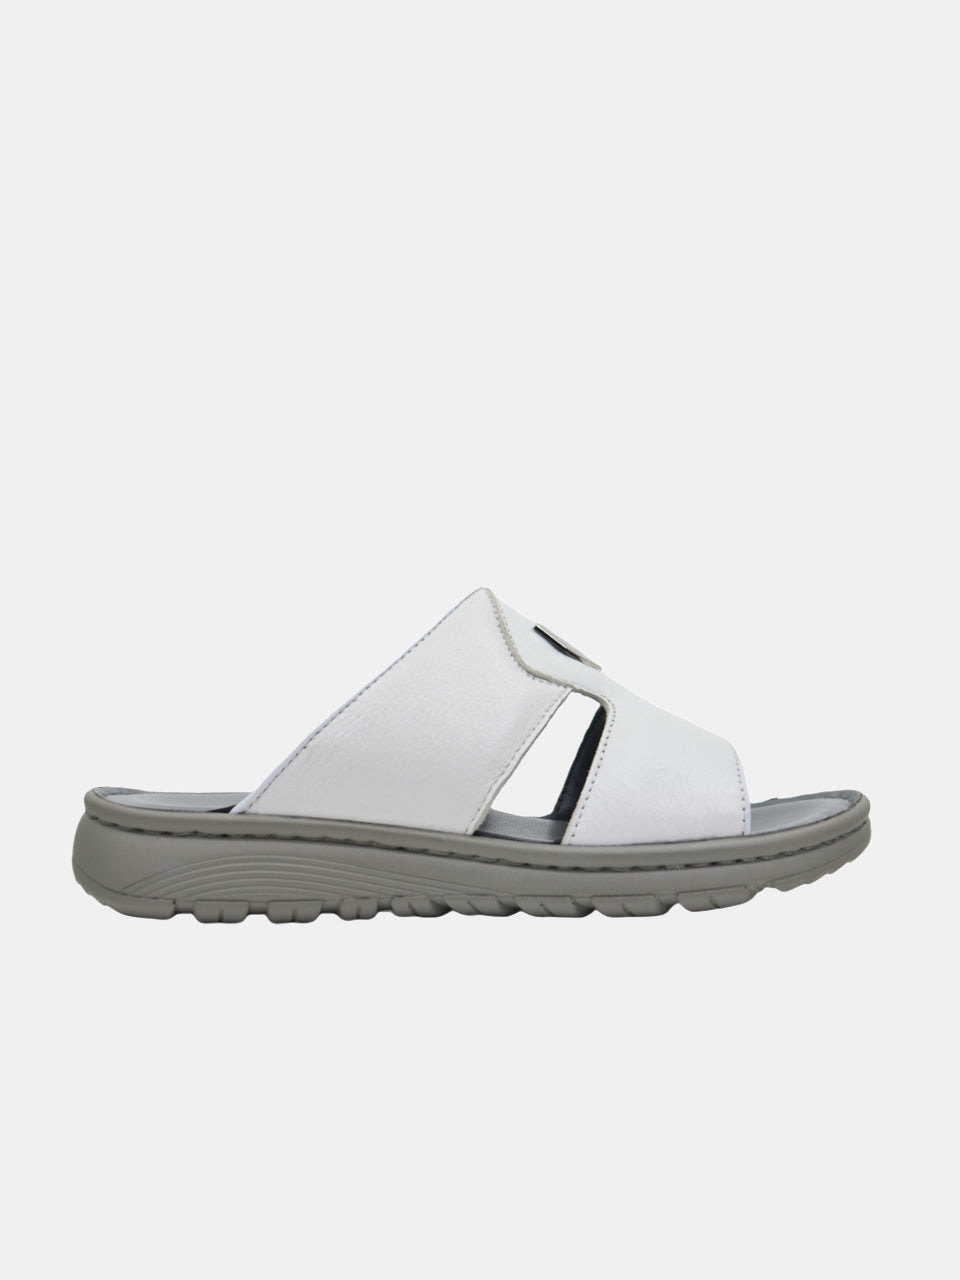 Barjeel Uno 29550-2 Men's Arabic Sandals #color_White